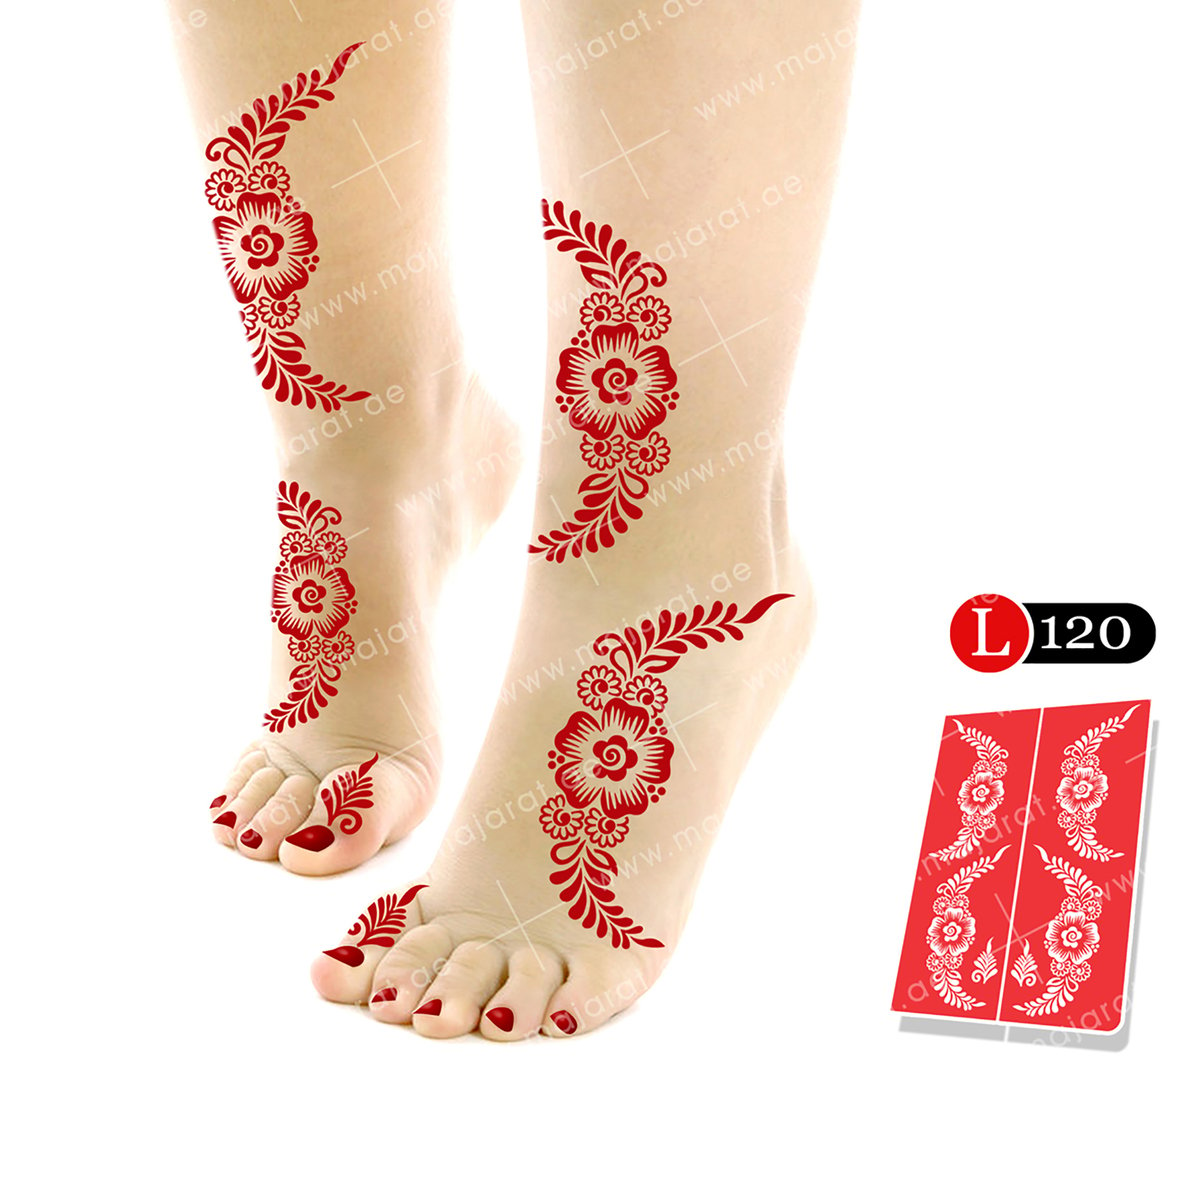 Majarat Henna Design Sticker Large L120 18x25cm